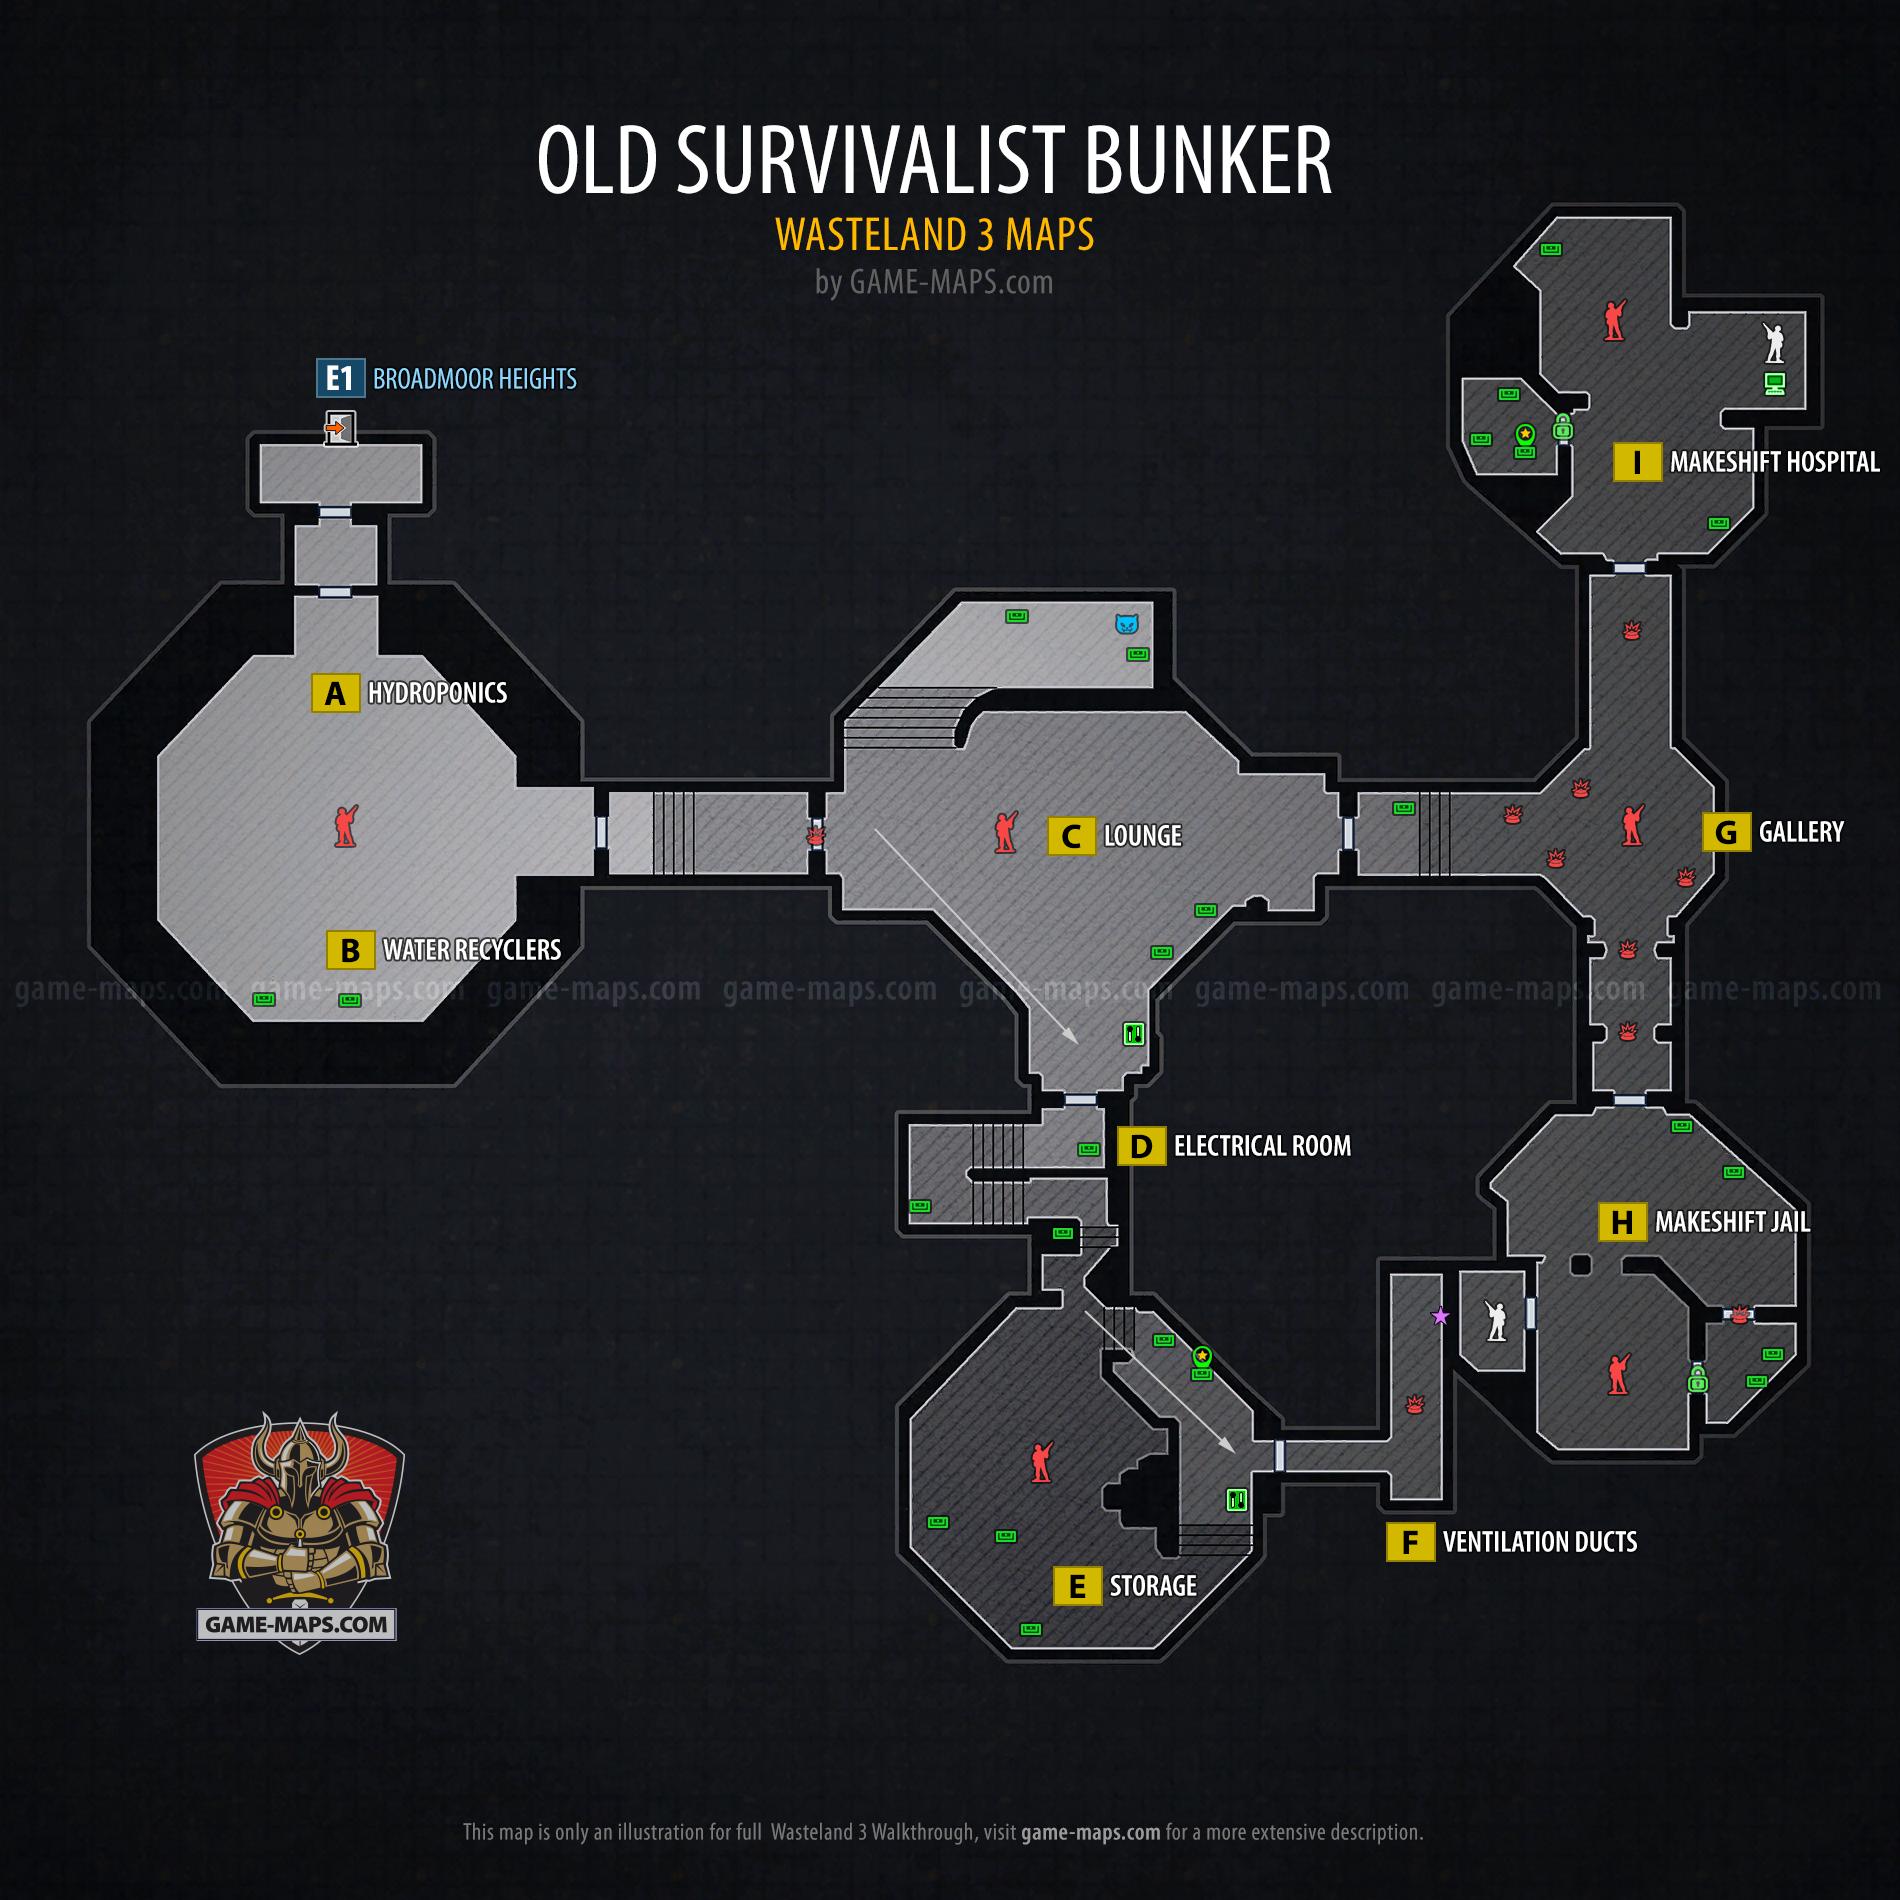 Old Survivalist Bunker Map - Wasteland 3